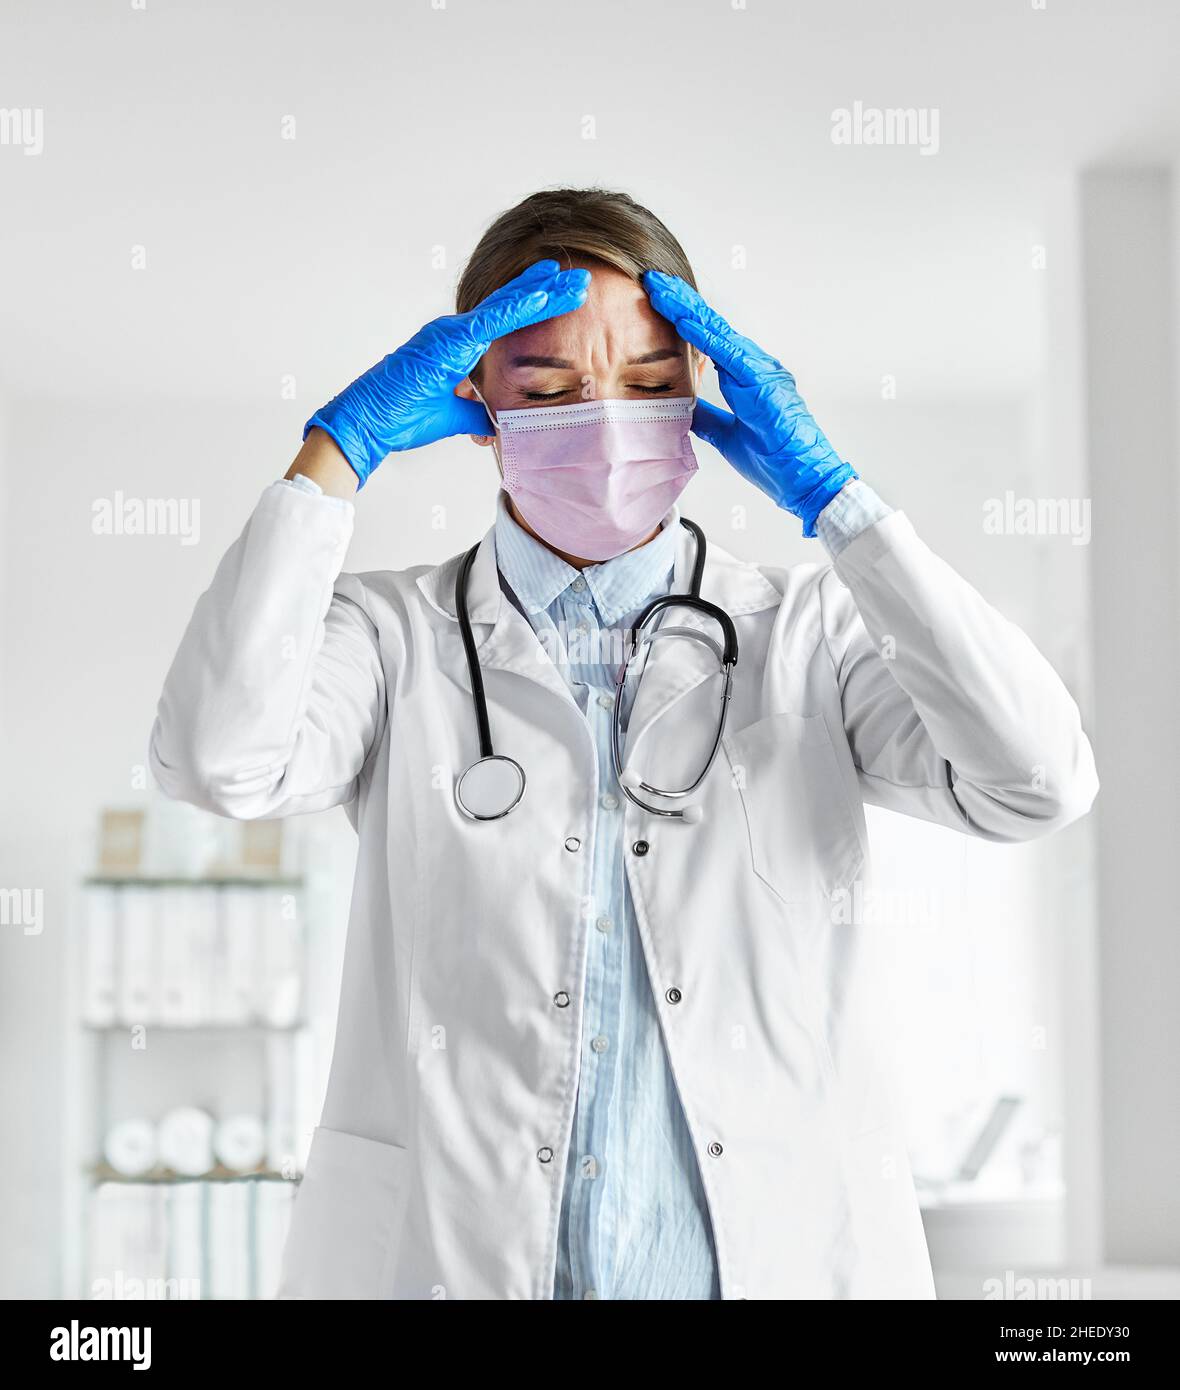 doctor medical mask exhausted hospital coronavirus health tired virus woman nurse pandemic care medicine Stock Photo